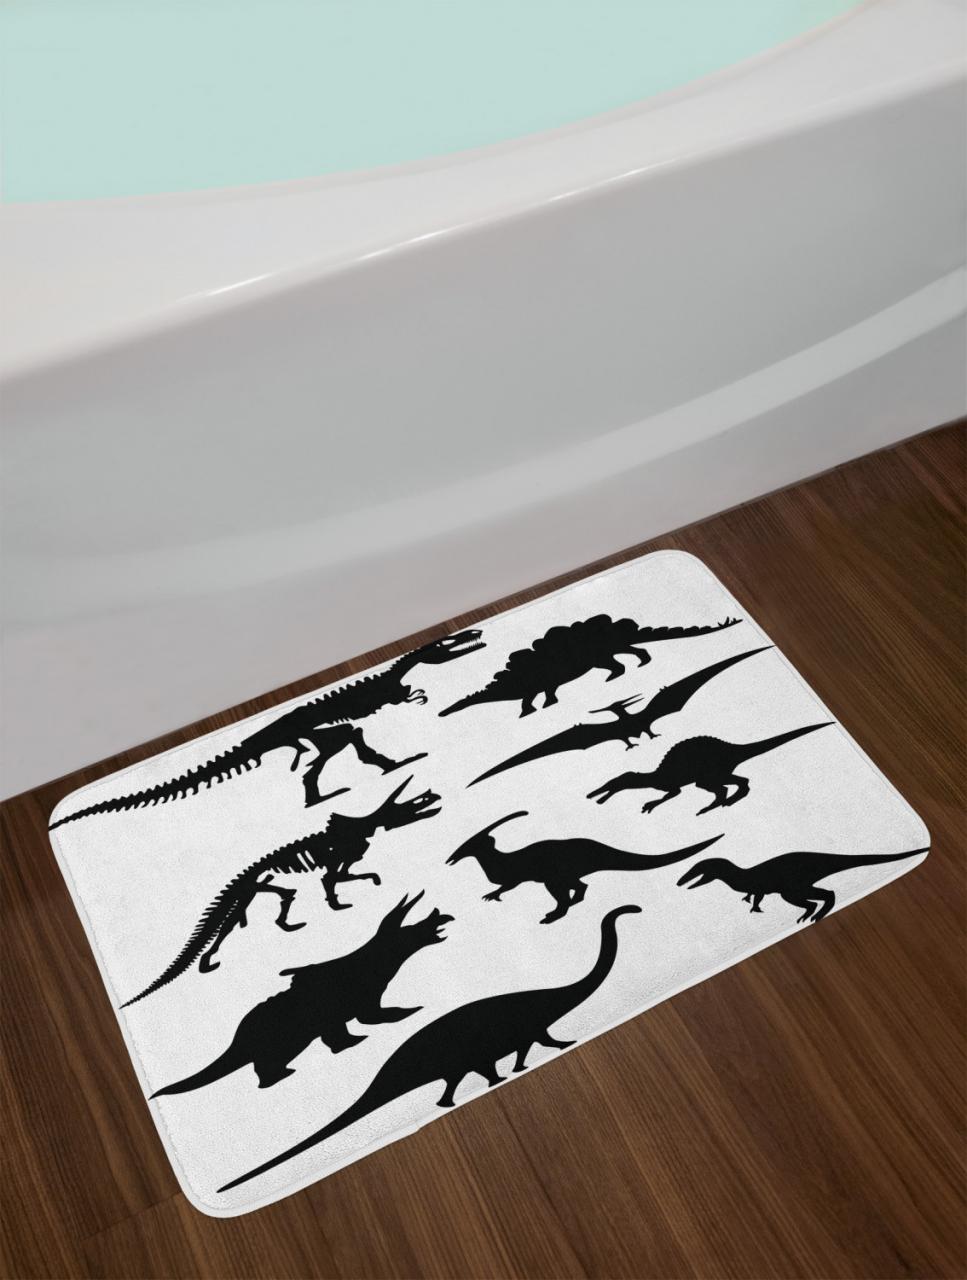 Dinosaur Bath Mat Bathroom Decor Plush NonSlip Mat 29.5" X 17.5" eBay